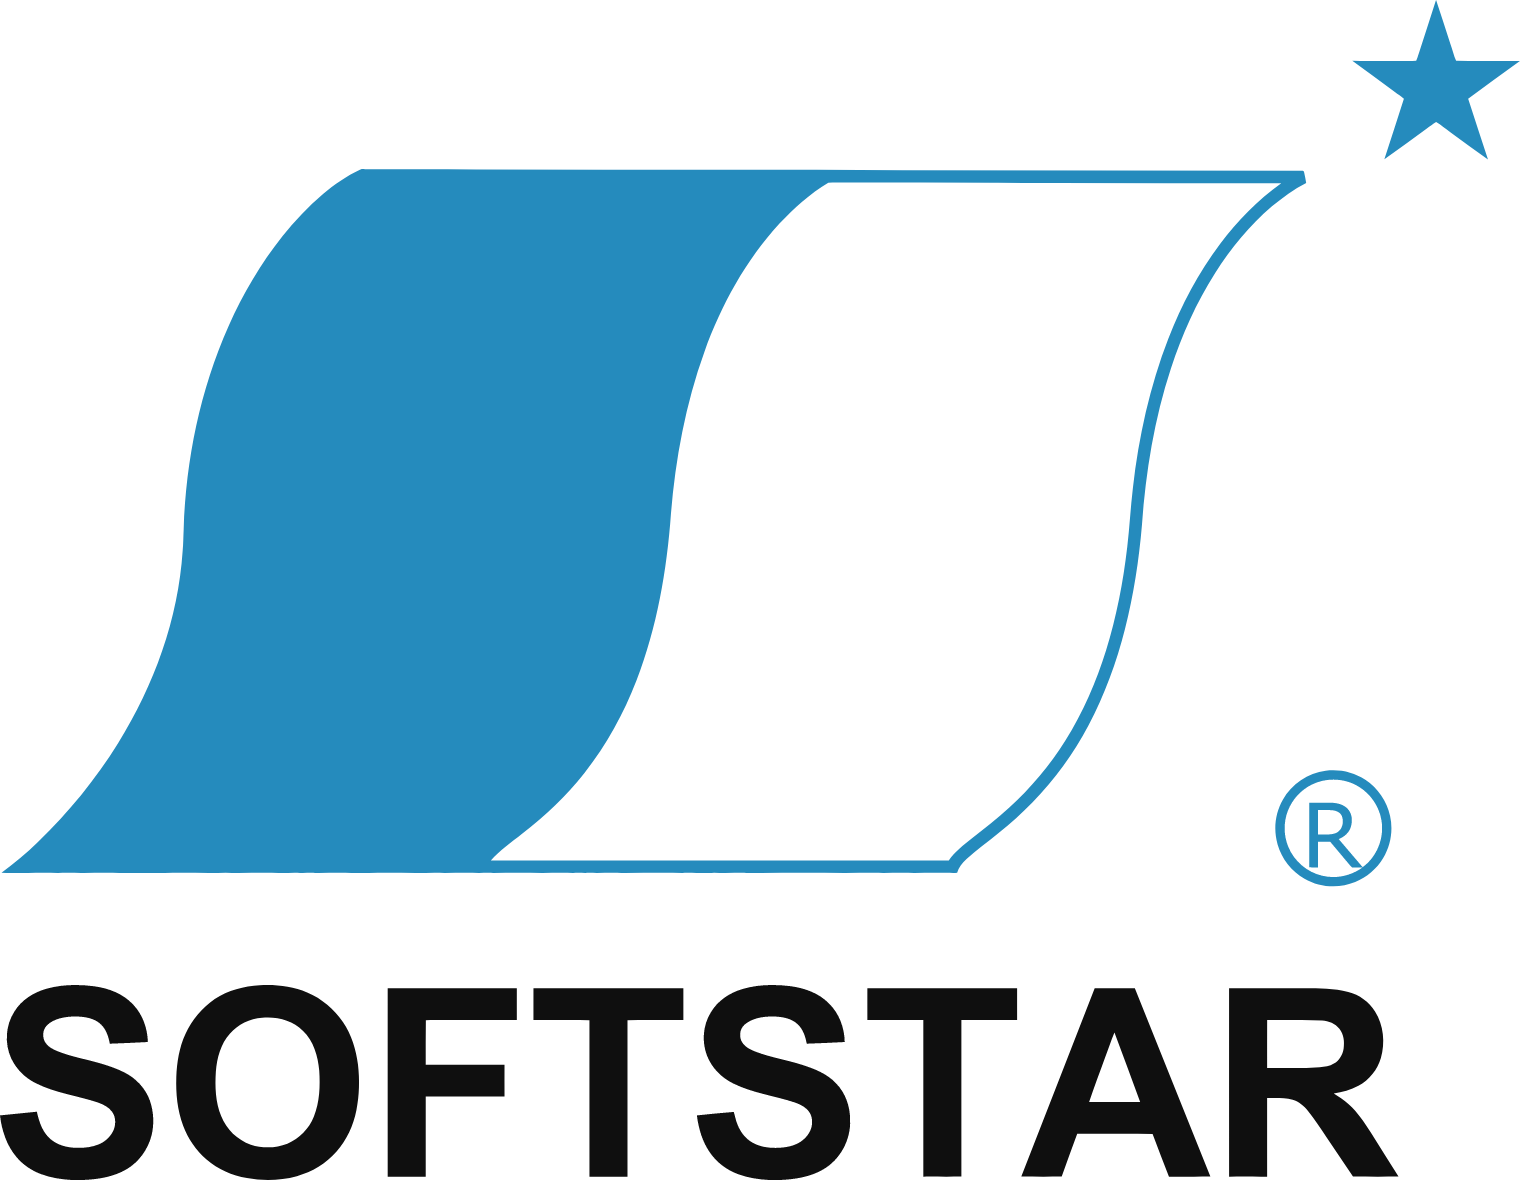 Softstar Entertainment logo large (transparent PNG)